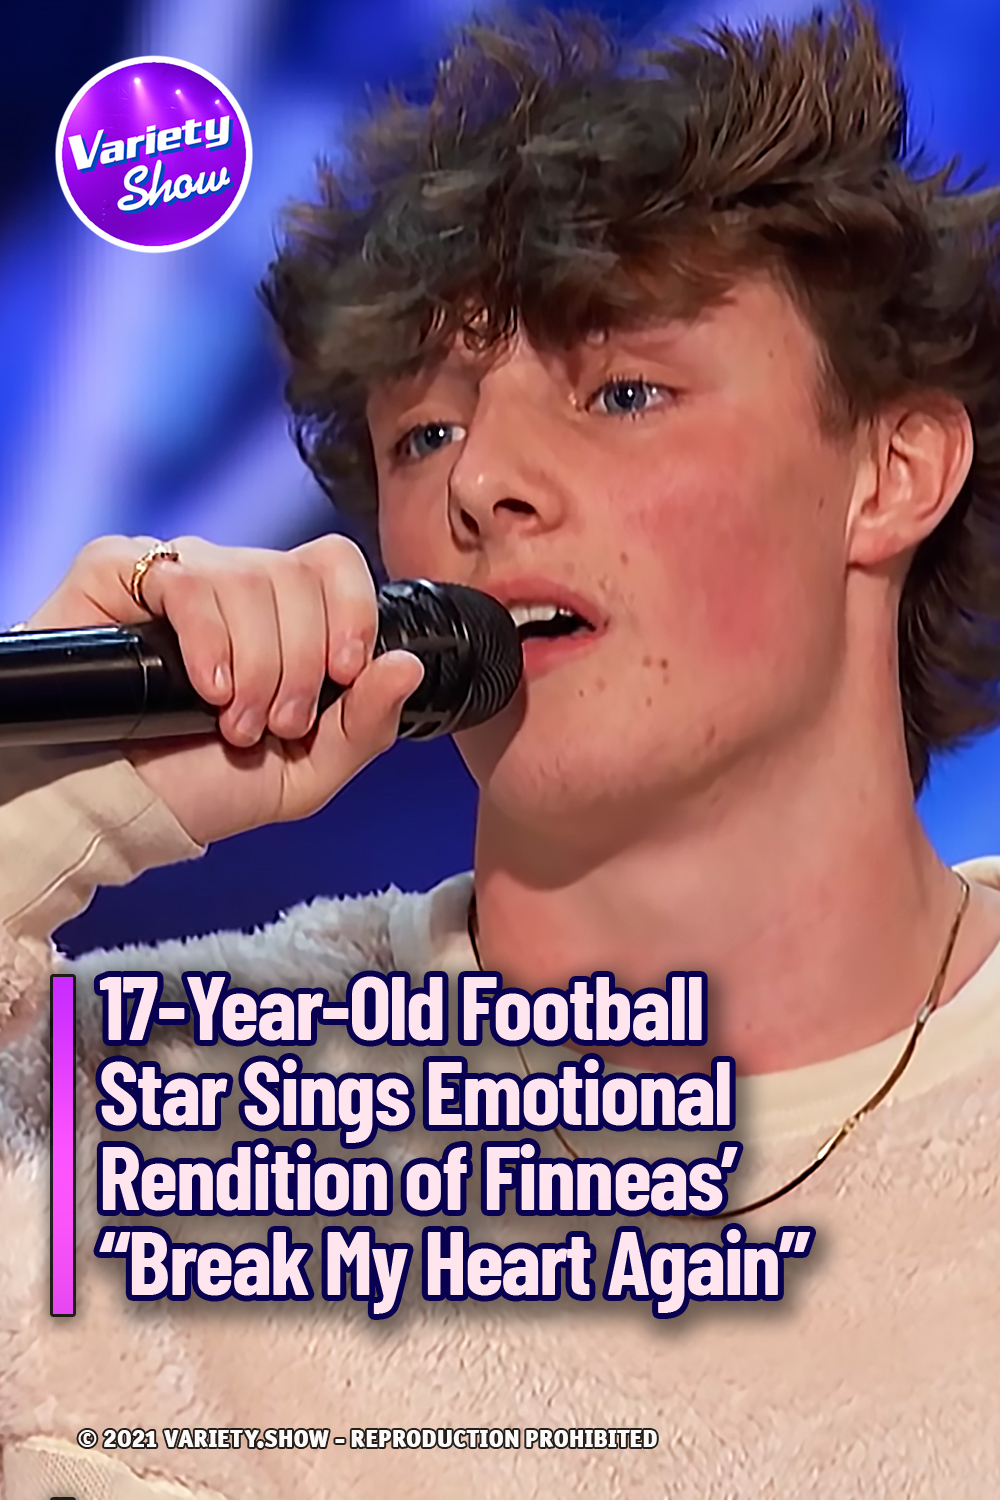 17-Year-Old Football Star Sings Emotional Rendition of Finneas’ “Break My Heart Again”